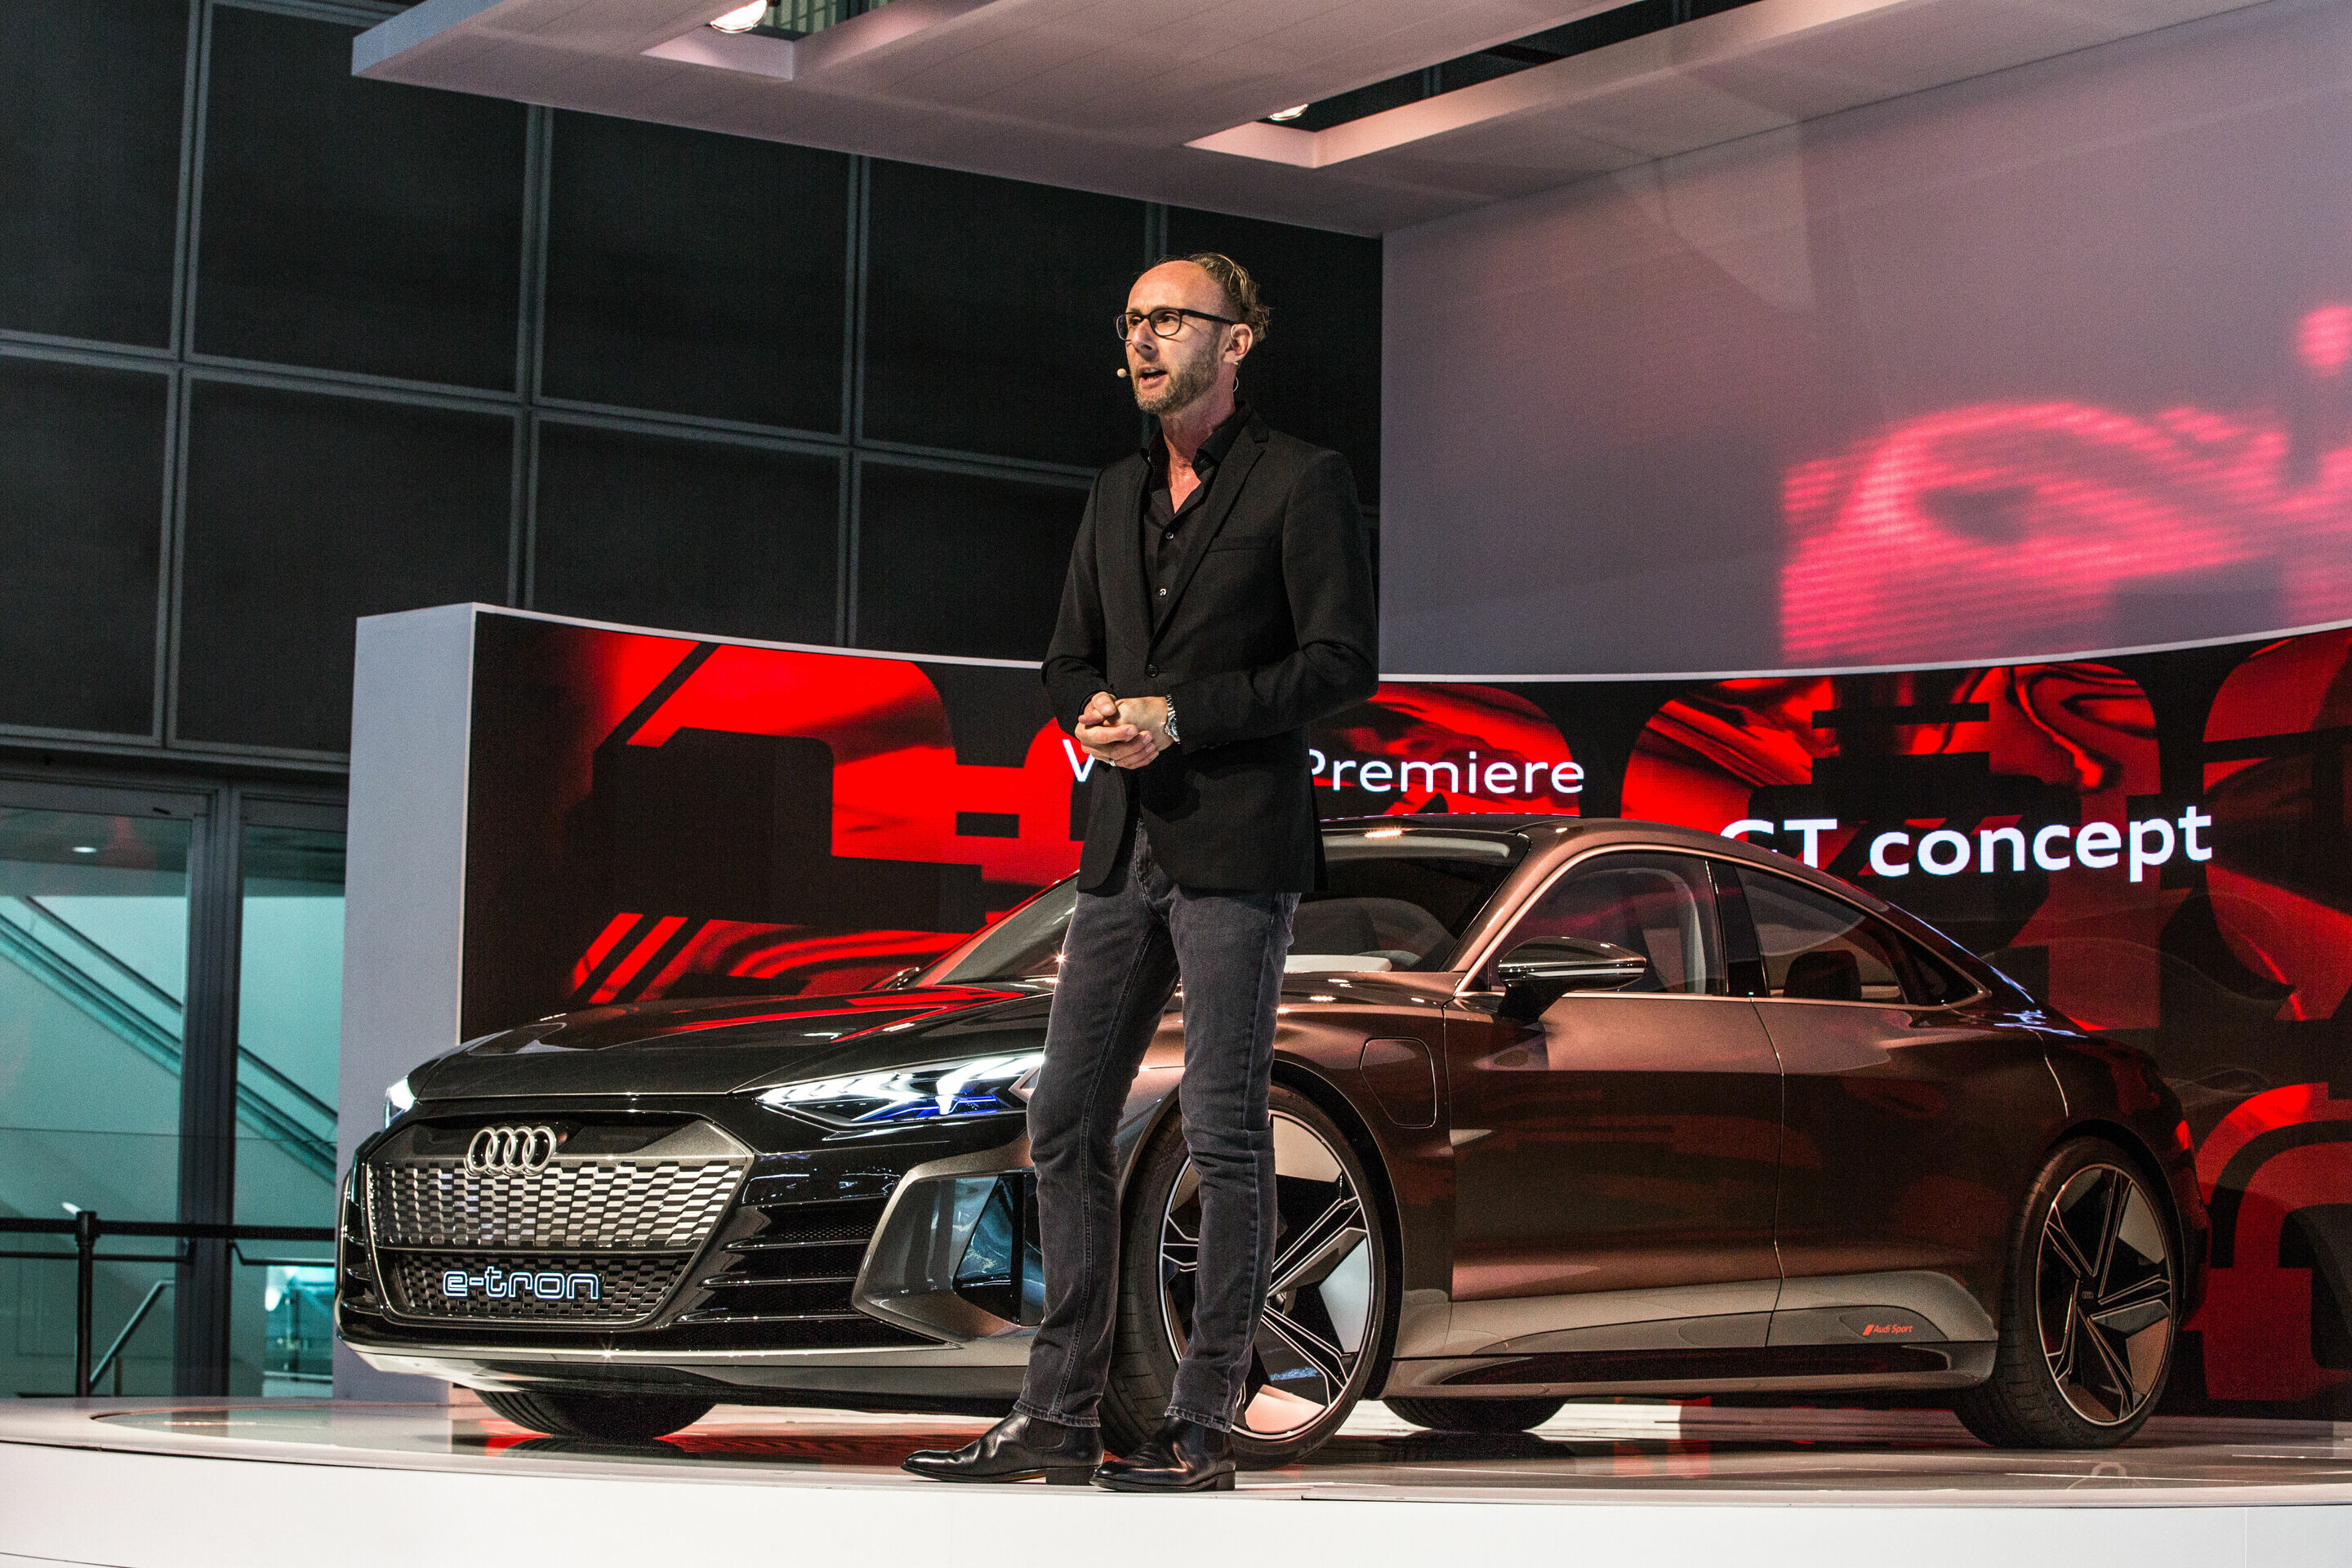 World premiere of the Audi e-tron GT concept at the Los Angeles Auto Show 2018